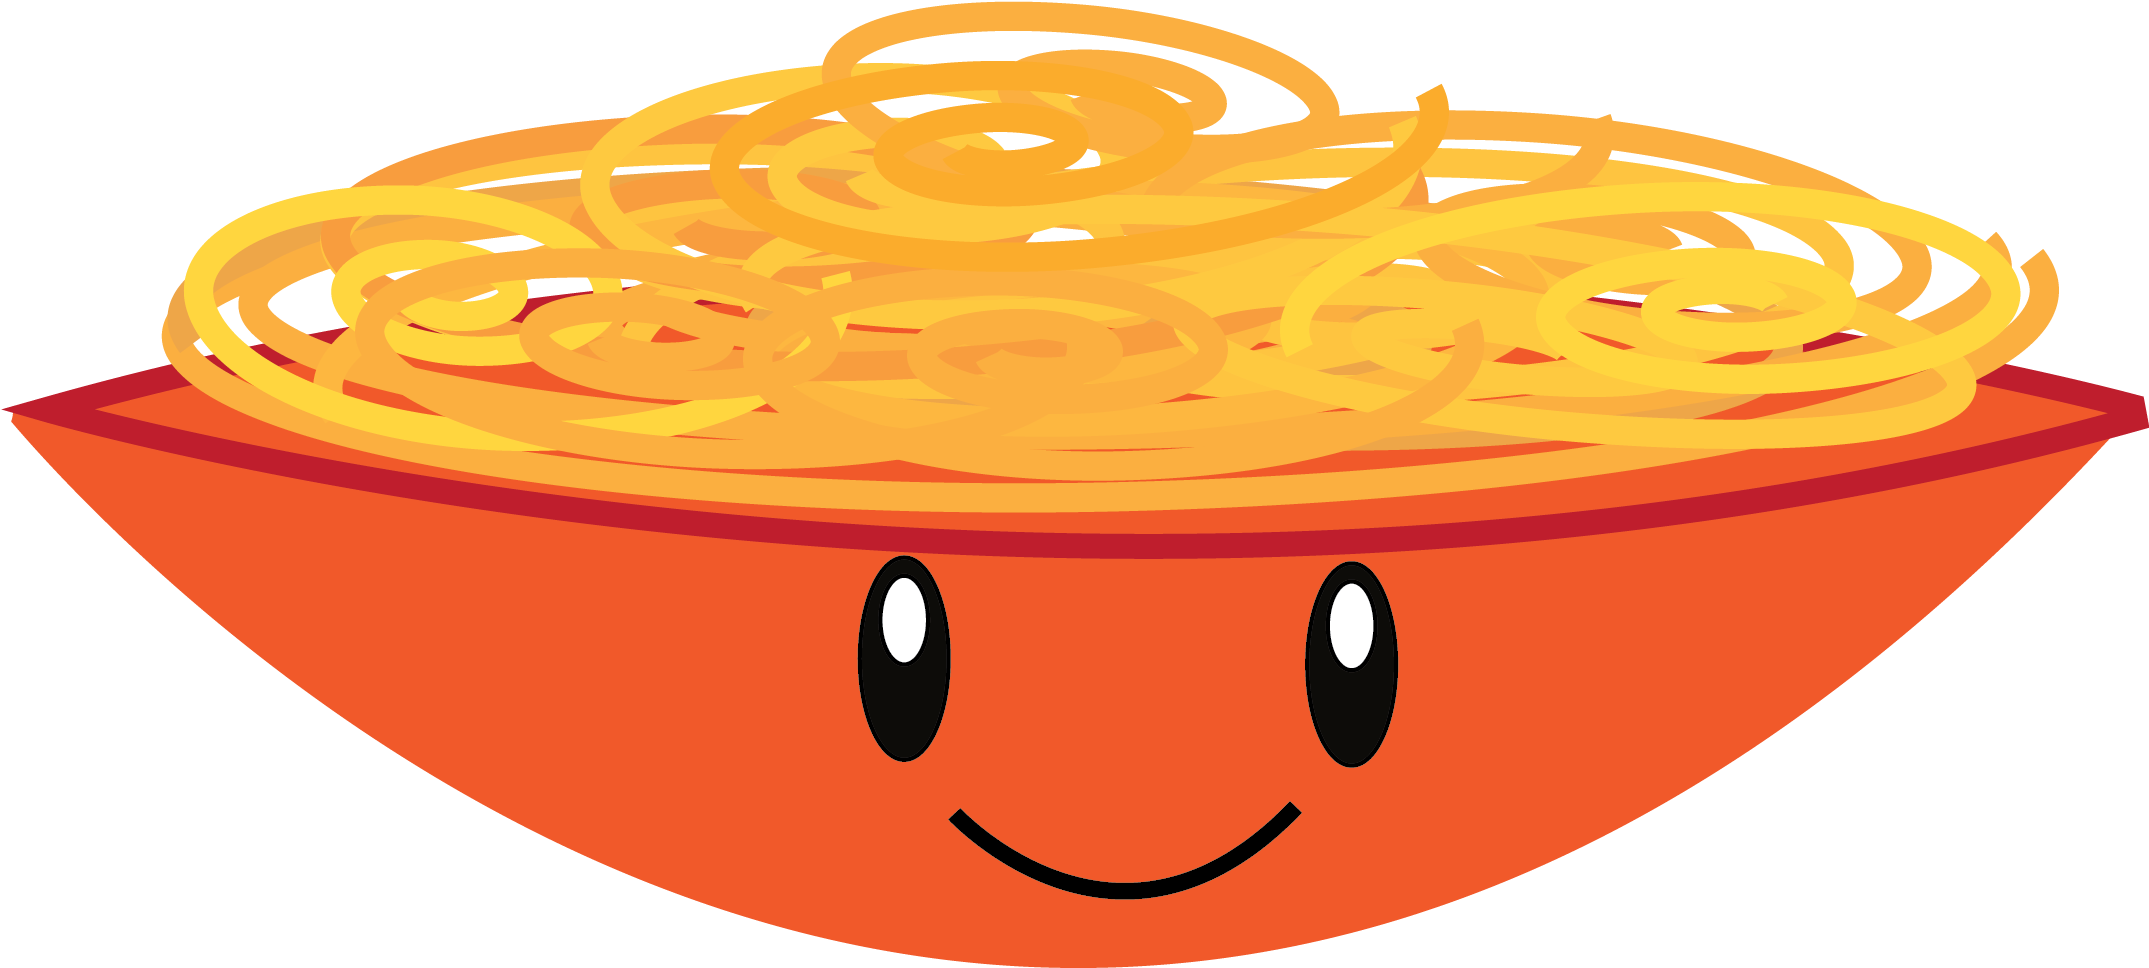 Oats Pasta Corn Rice - Spaghetti (2492x1535)